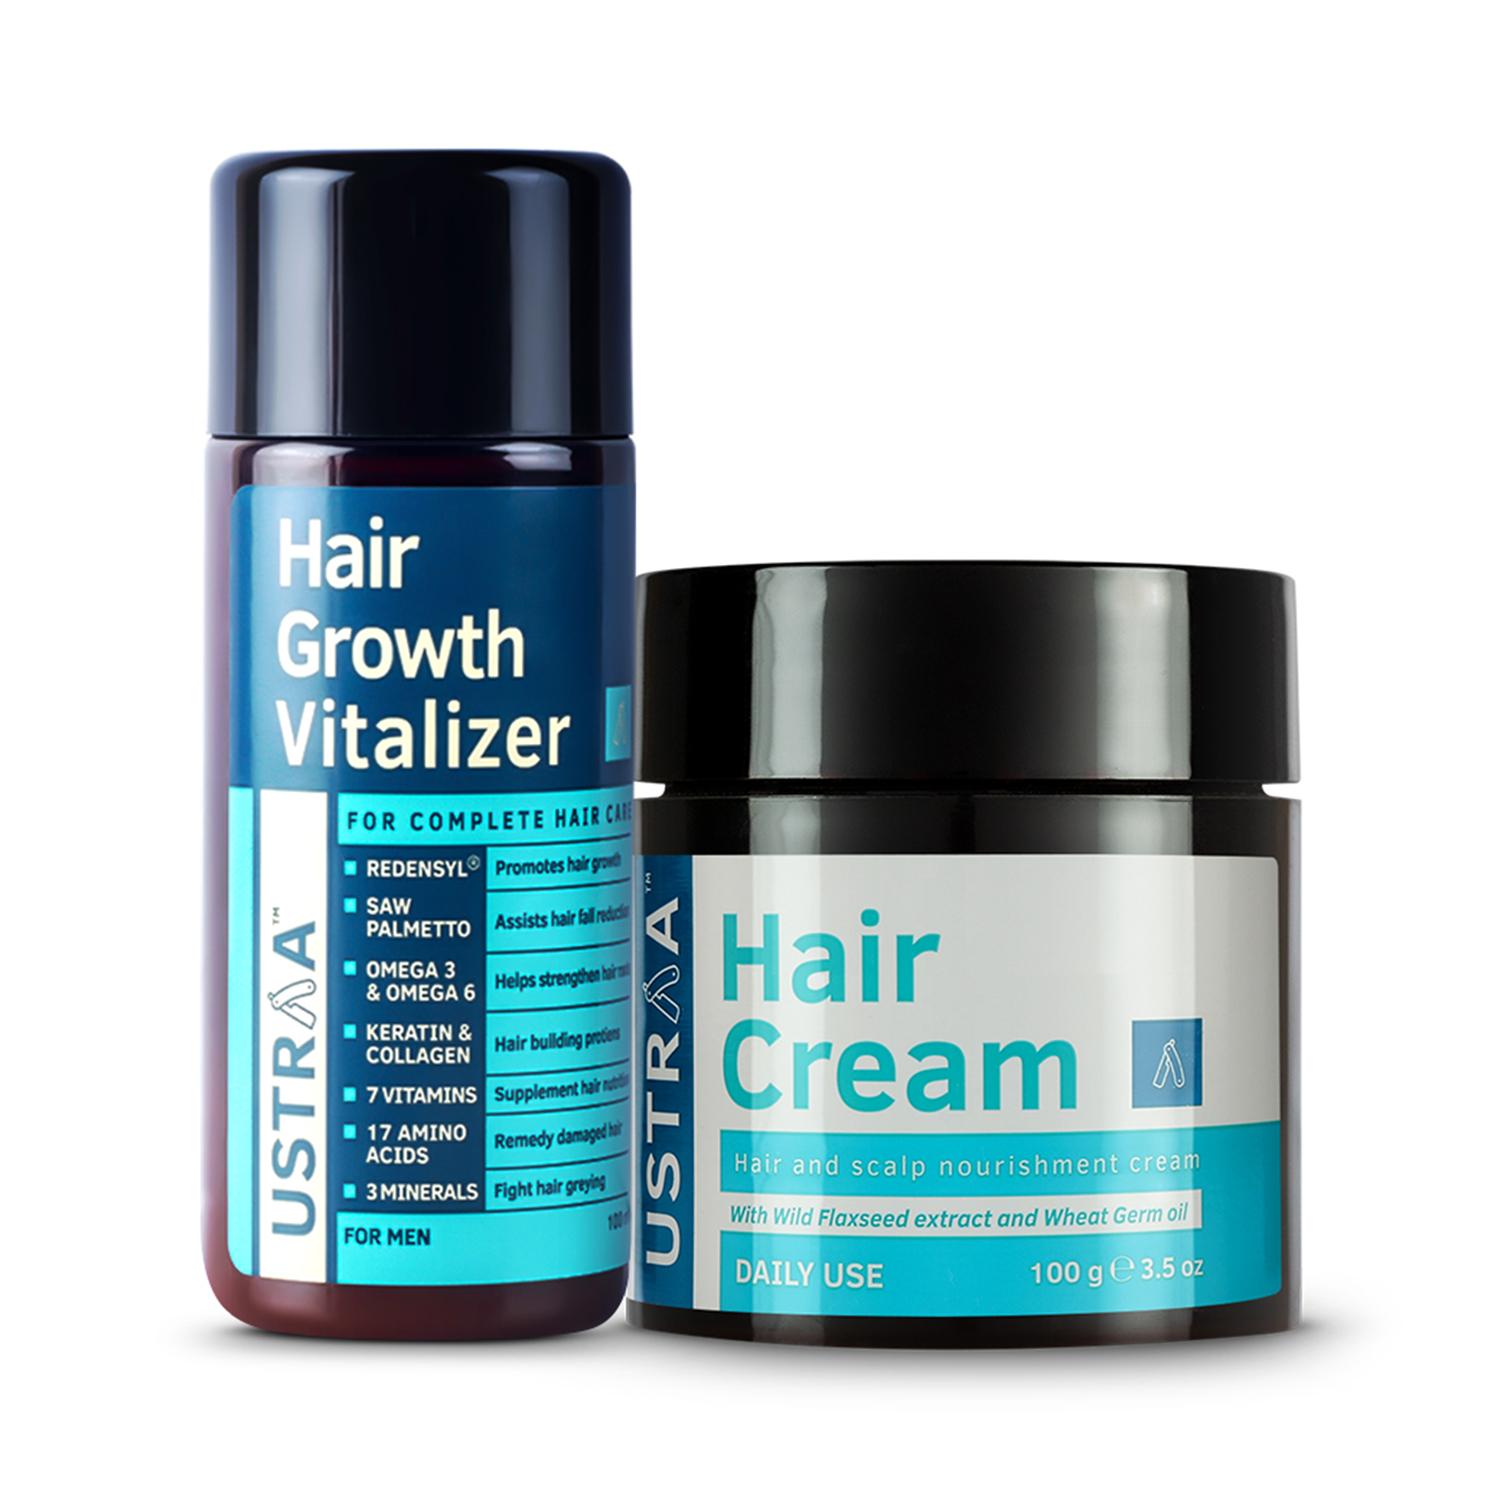 Ustraa | Ustraa Night Cream & Hair Growth Vitalizer